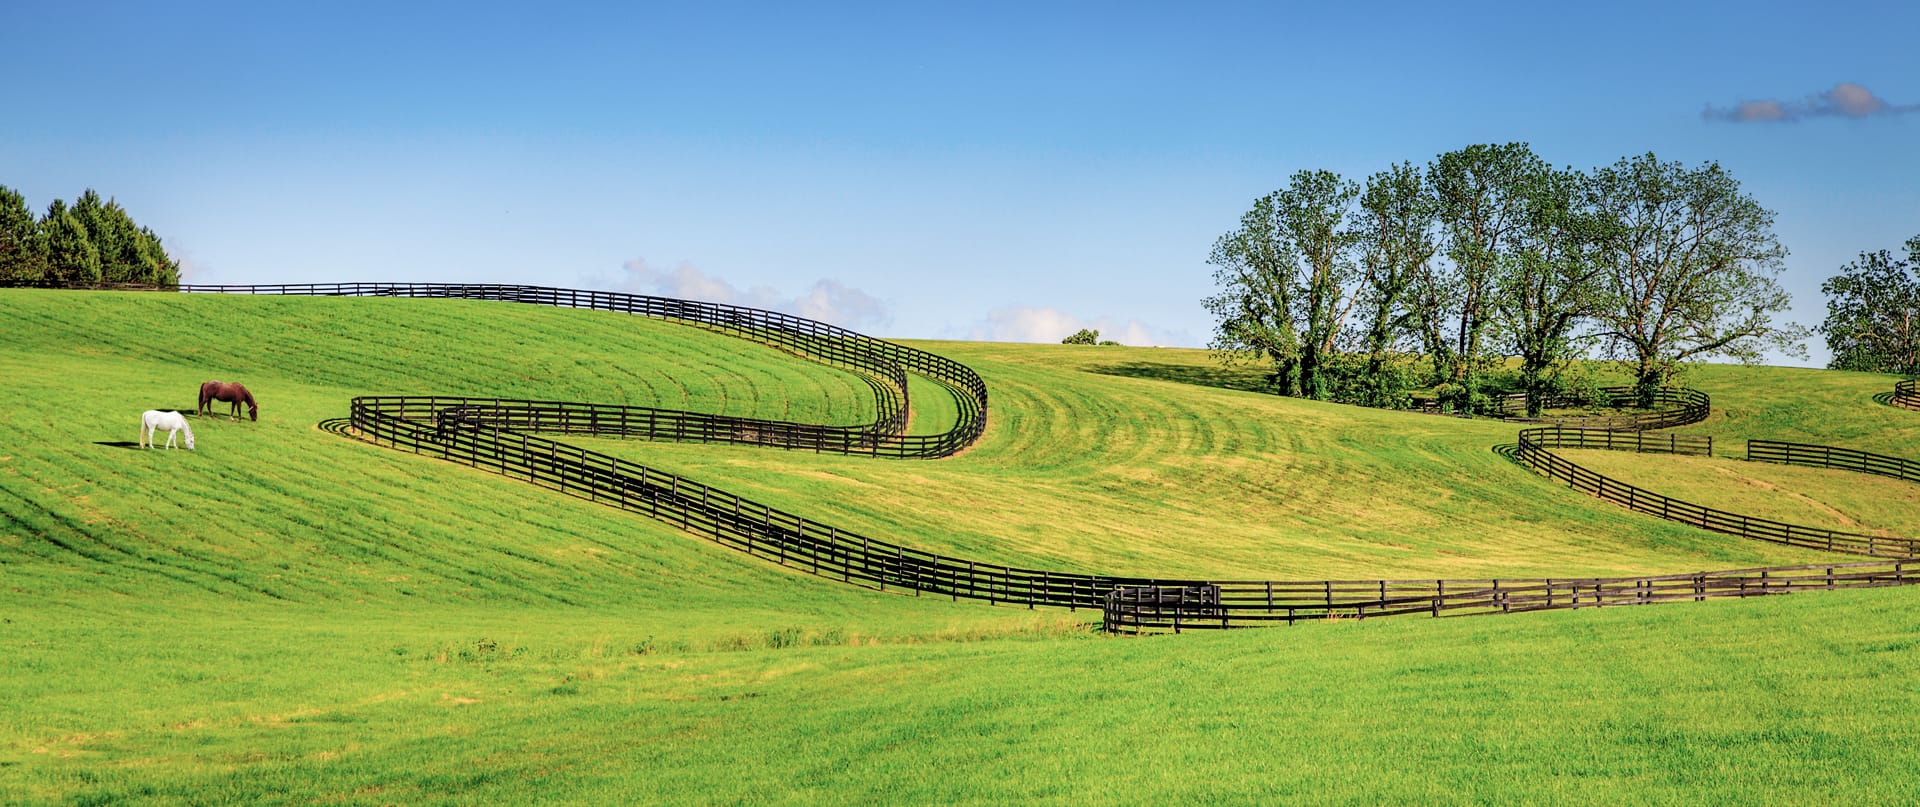 Horses in a field near a winding fence